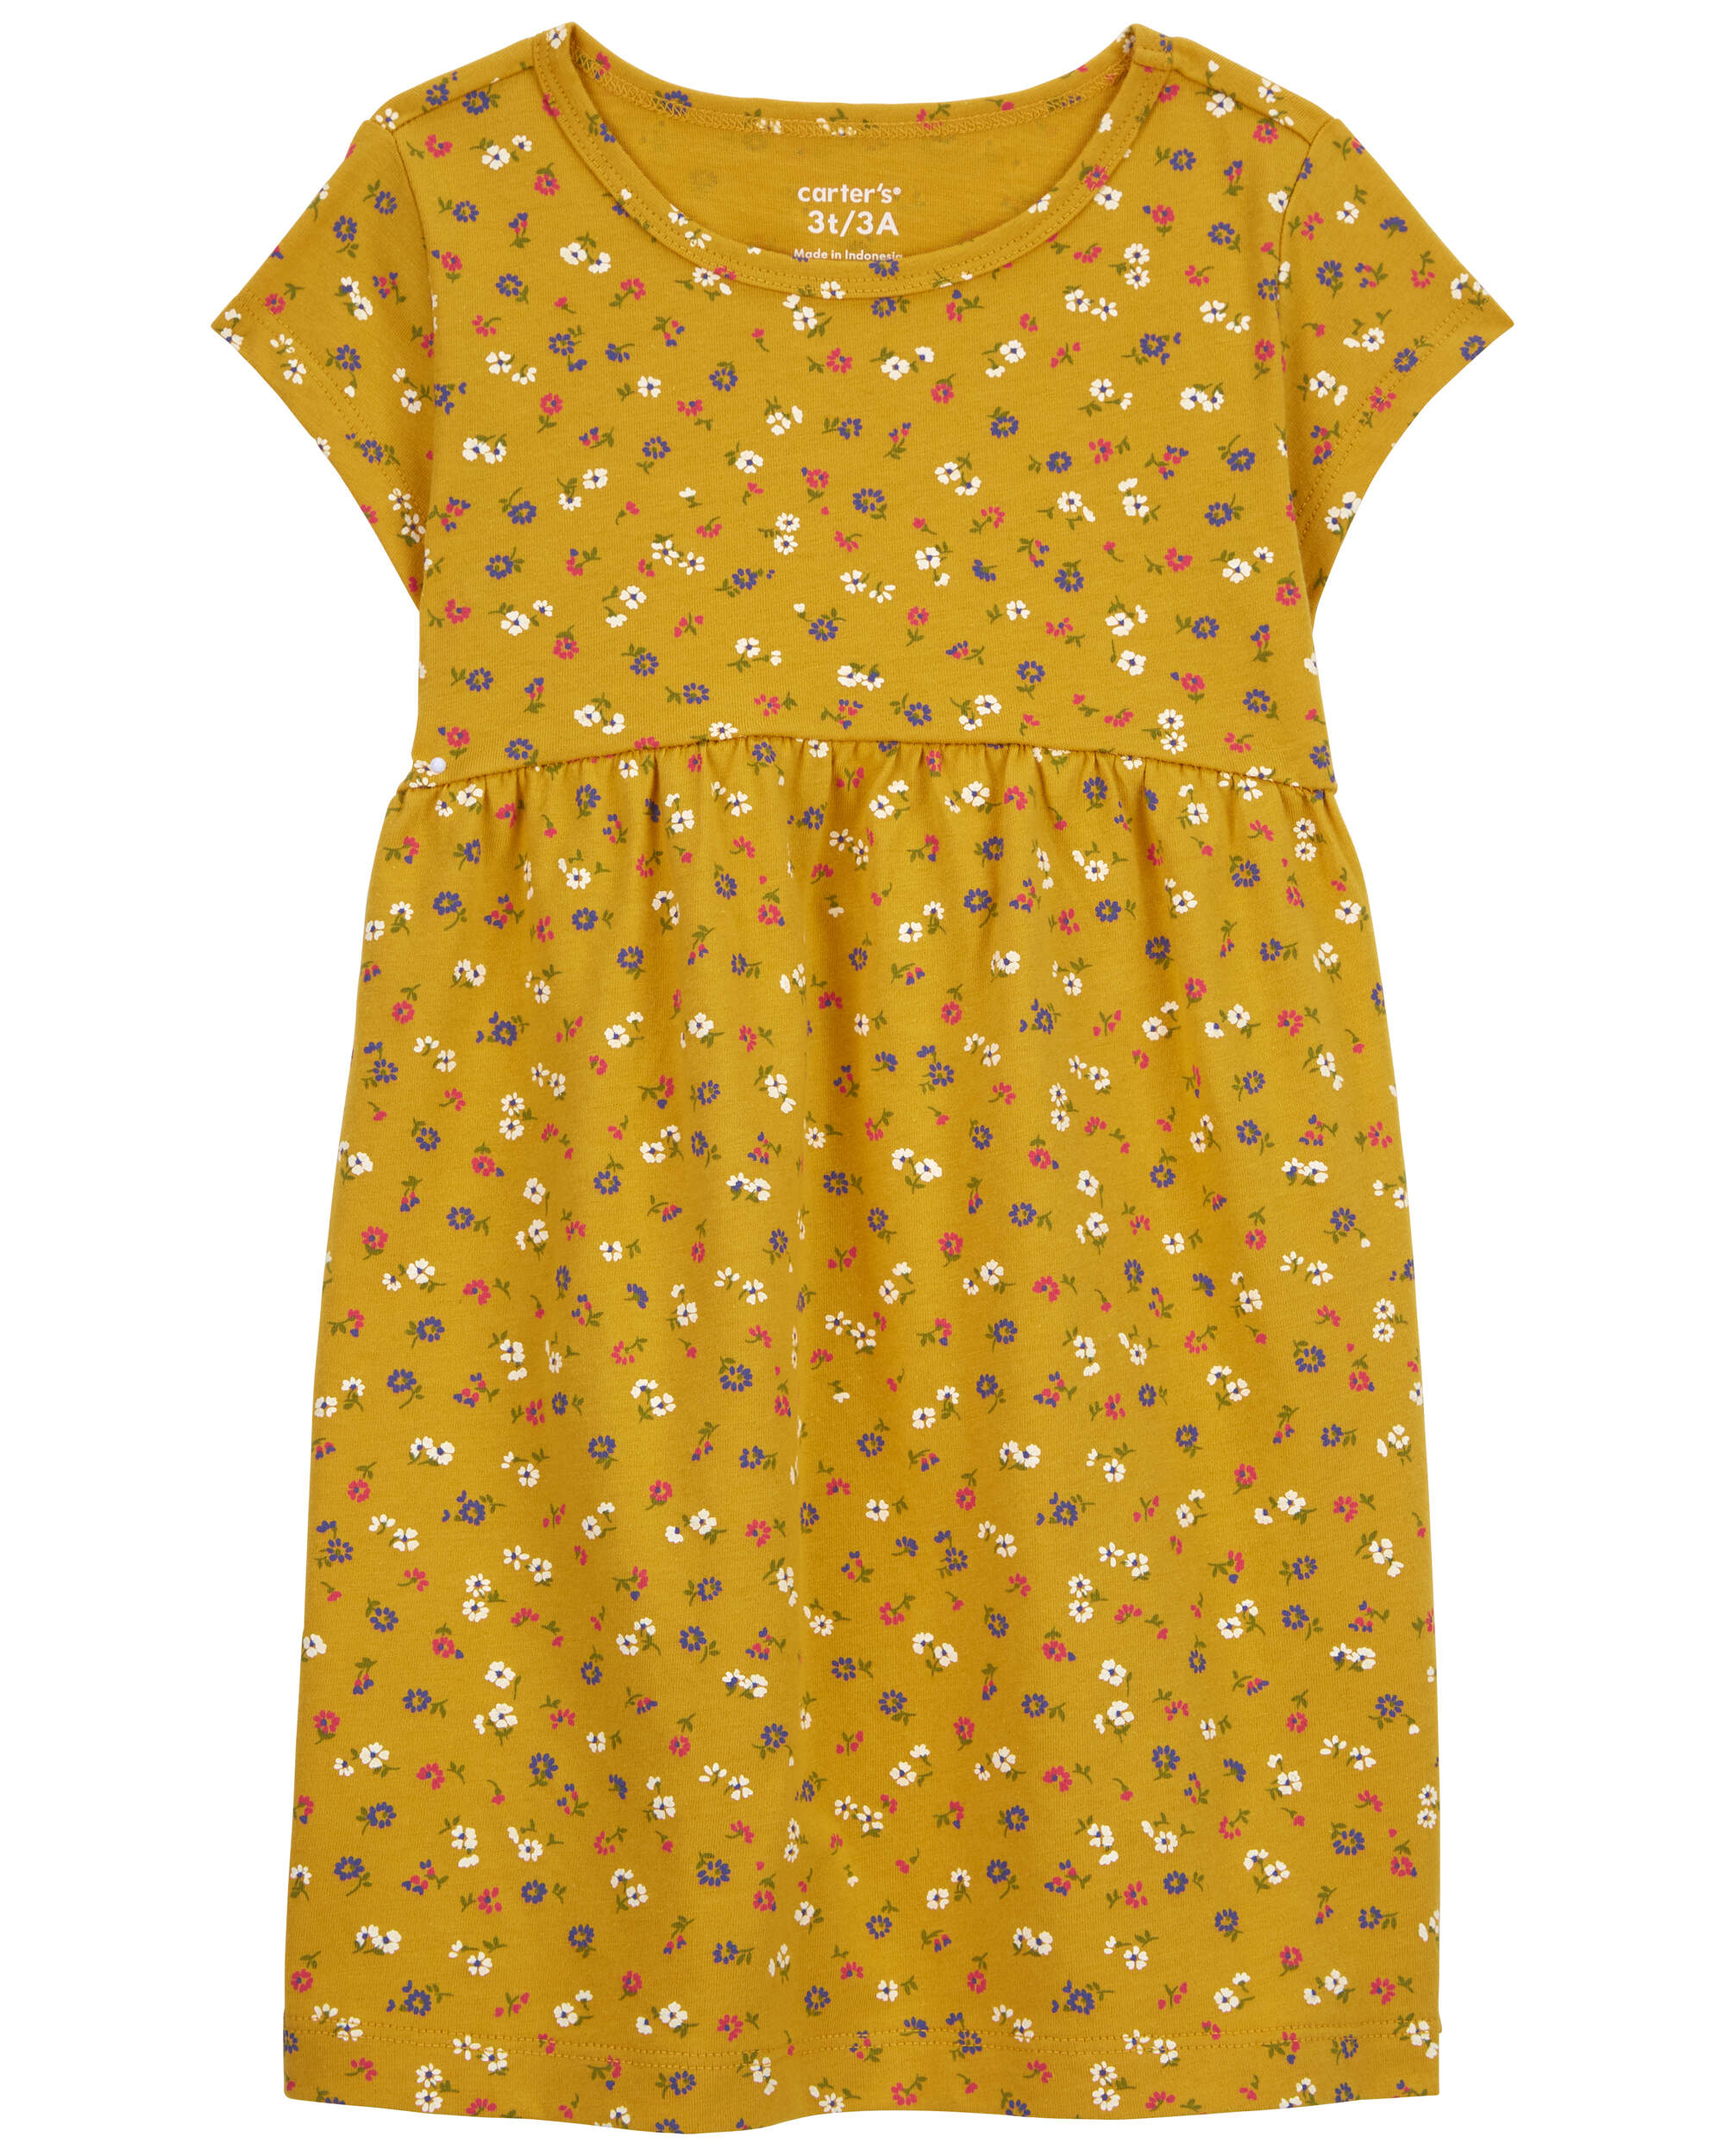 Toddler Floral Jersey Dress